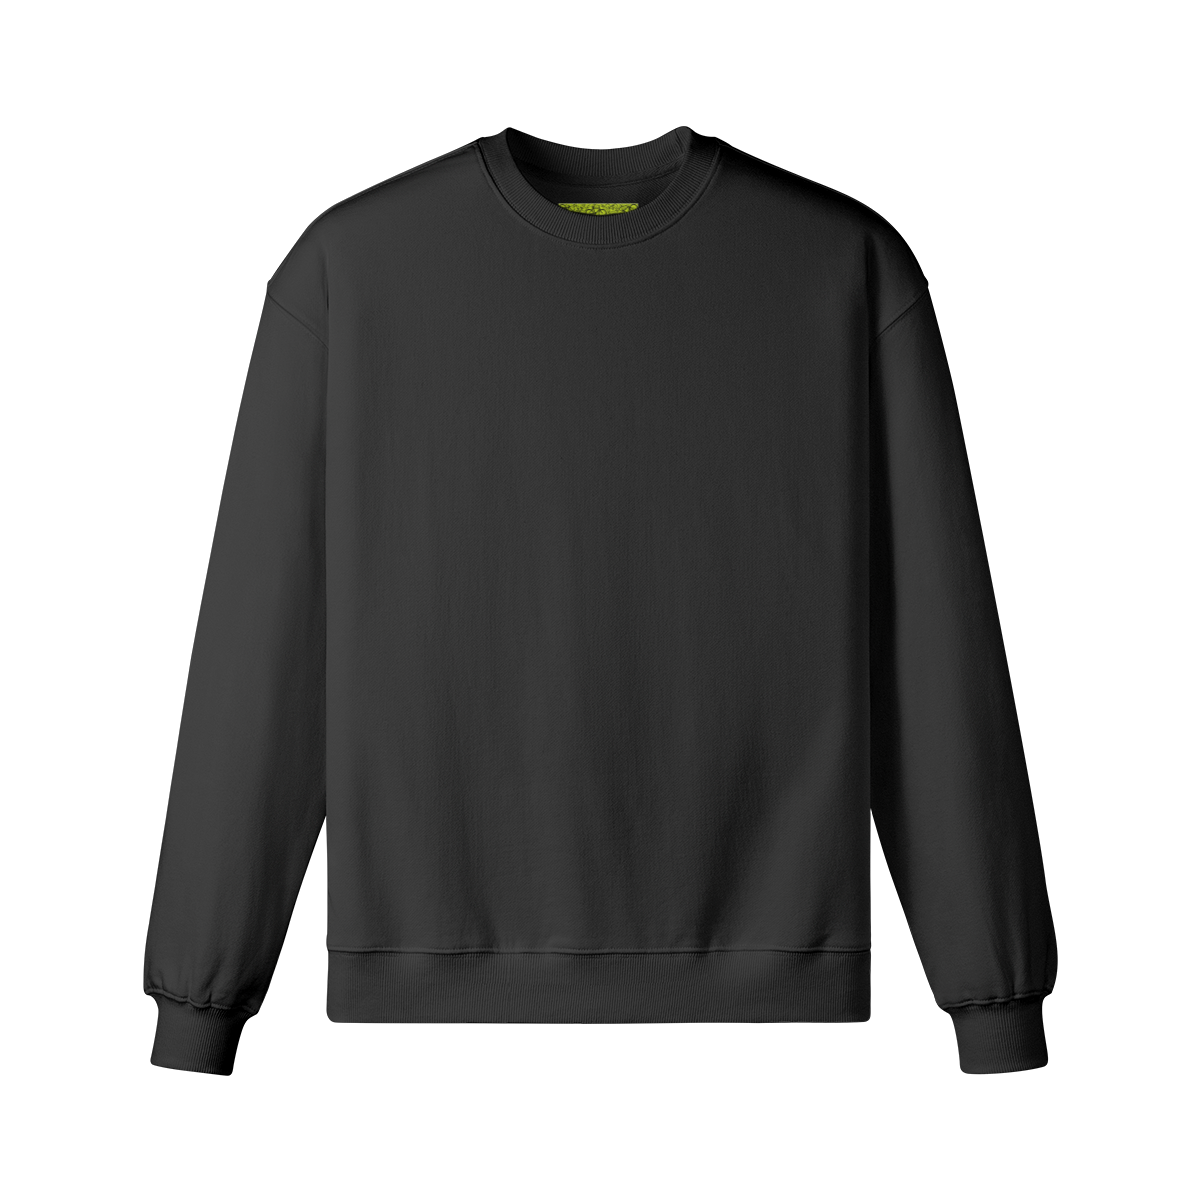 JELLY B. (BACK PRINT) - Unisex Oversized Sweatshirt